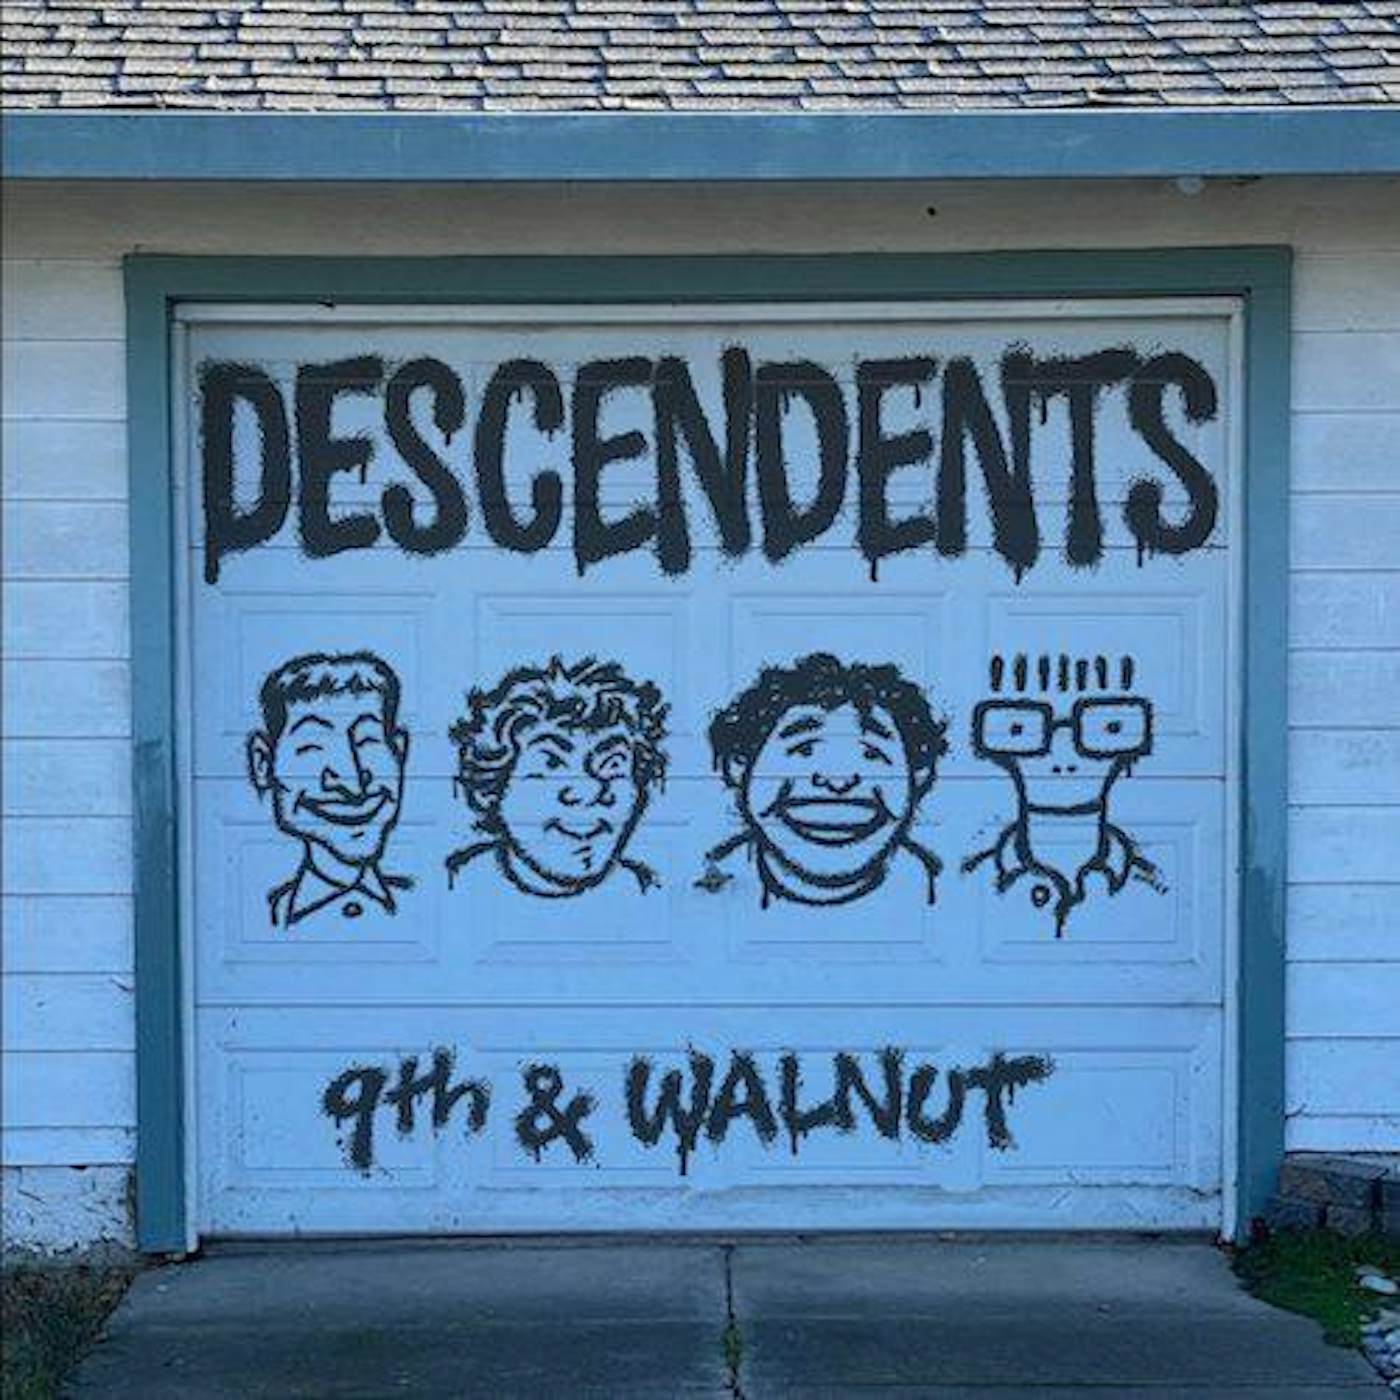 Descendents 9th & Walnut Vinyl Record